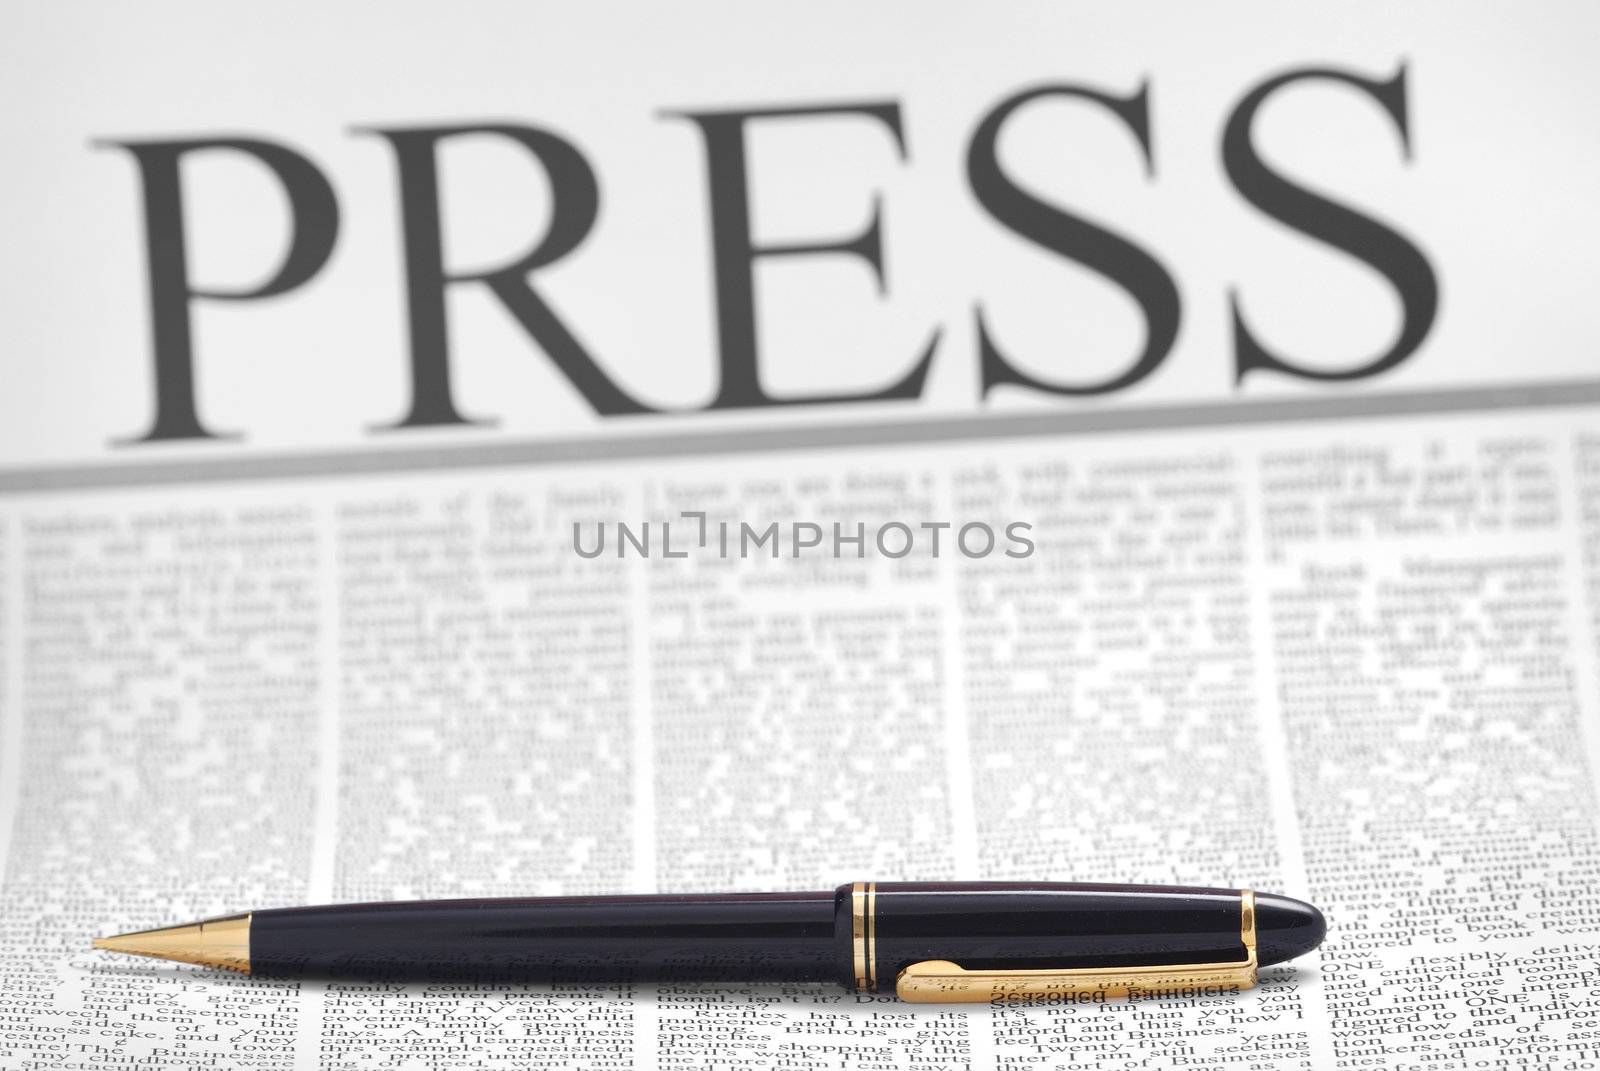 press headline, luxury pen on newspaper page